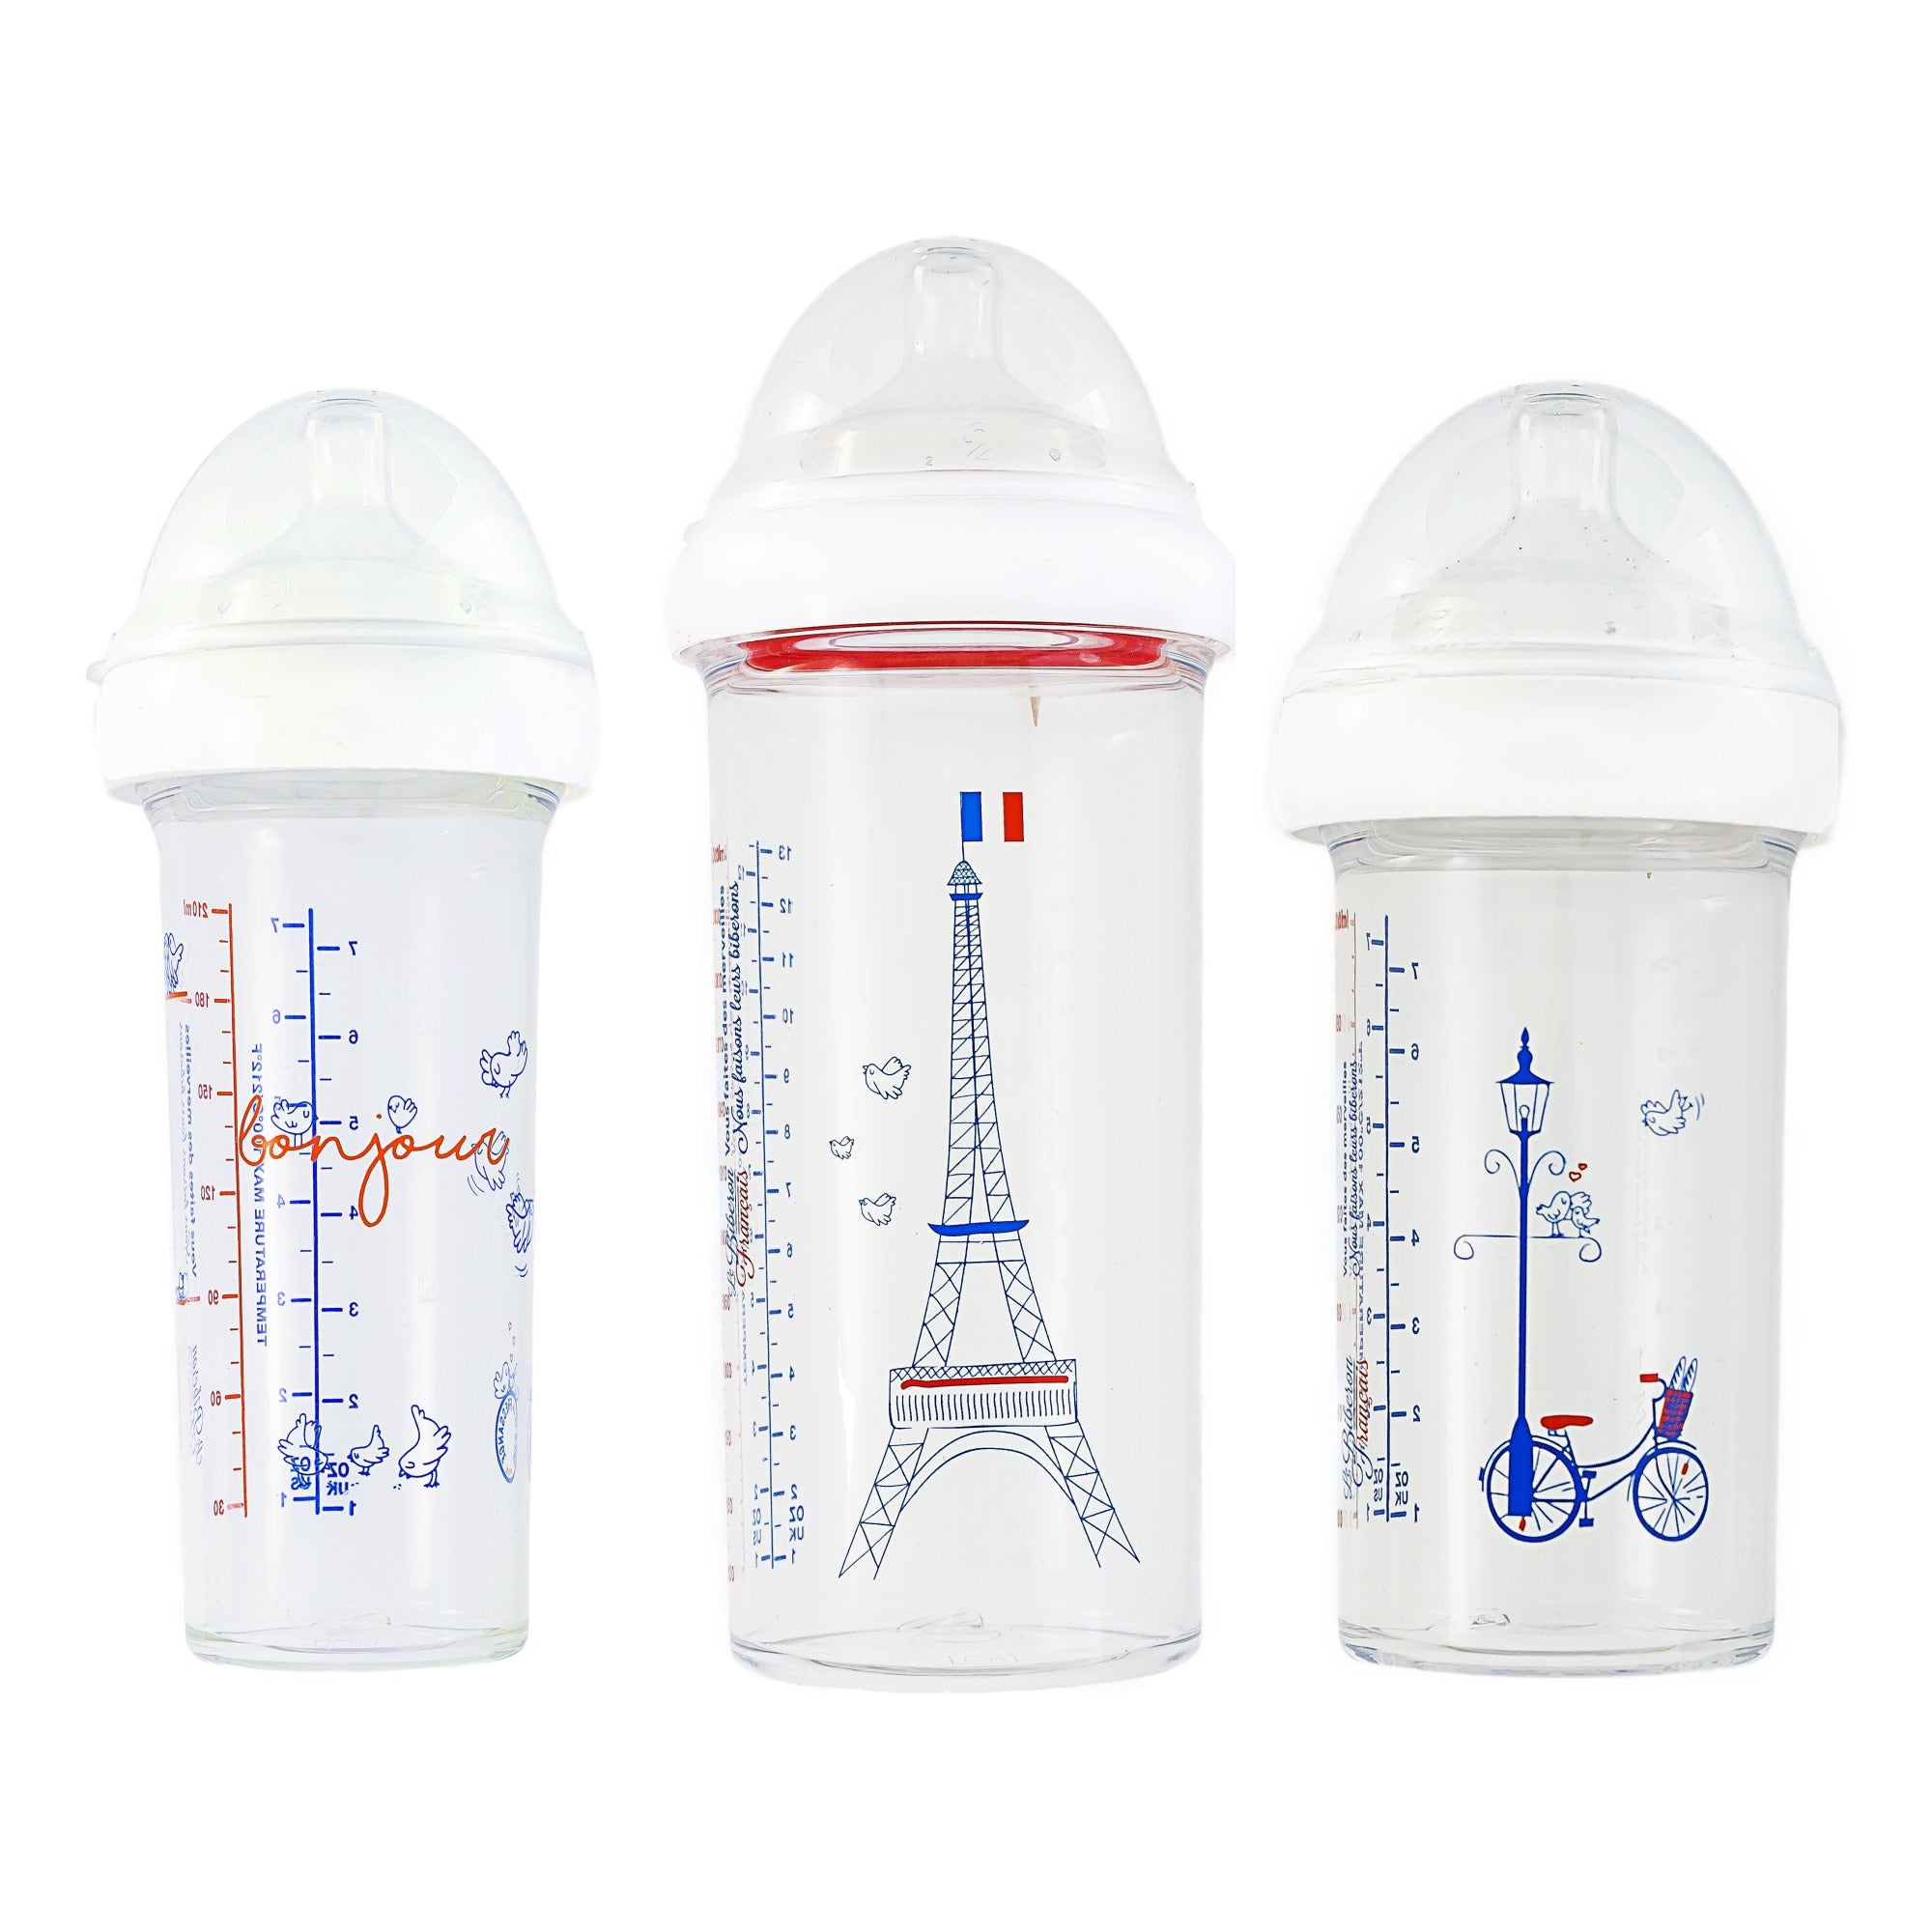 Baby bottles made in France